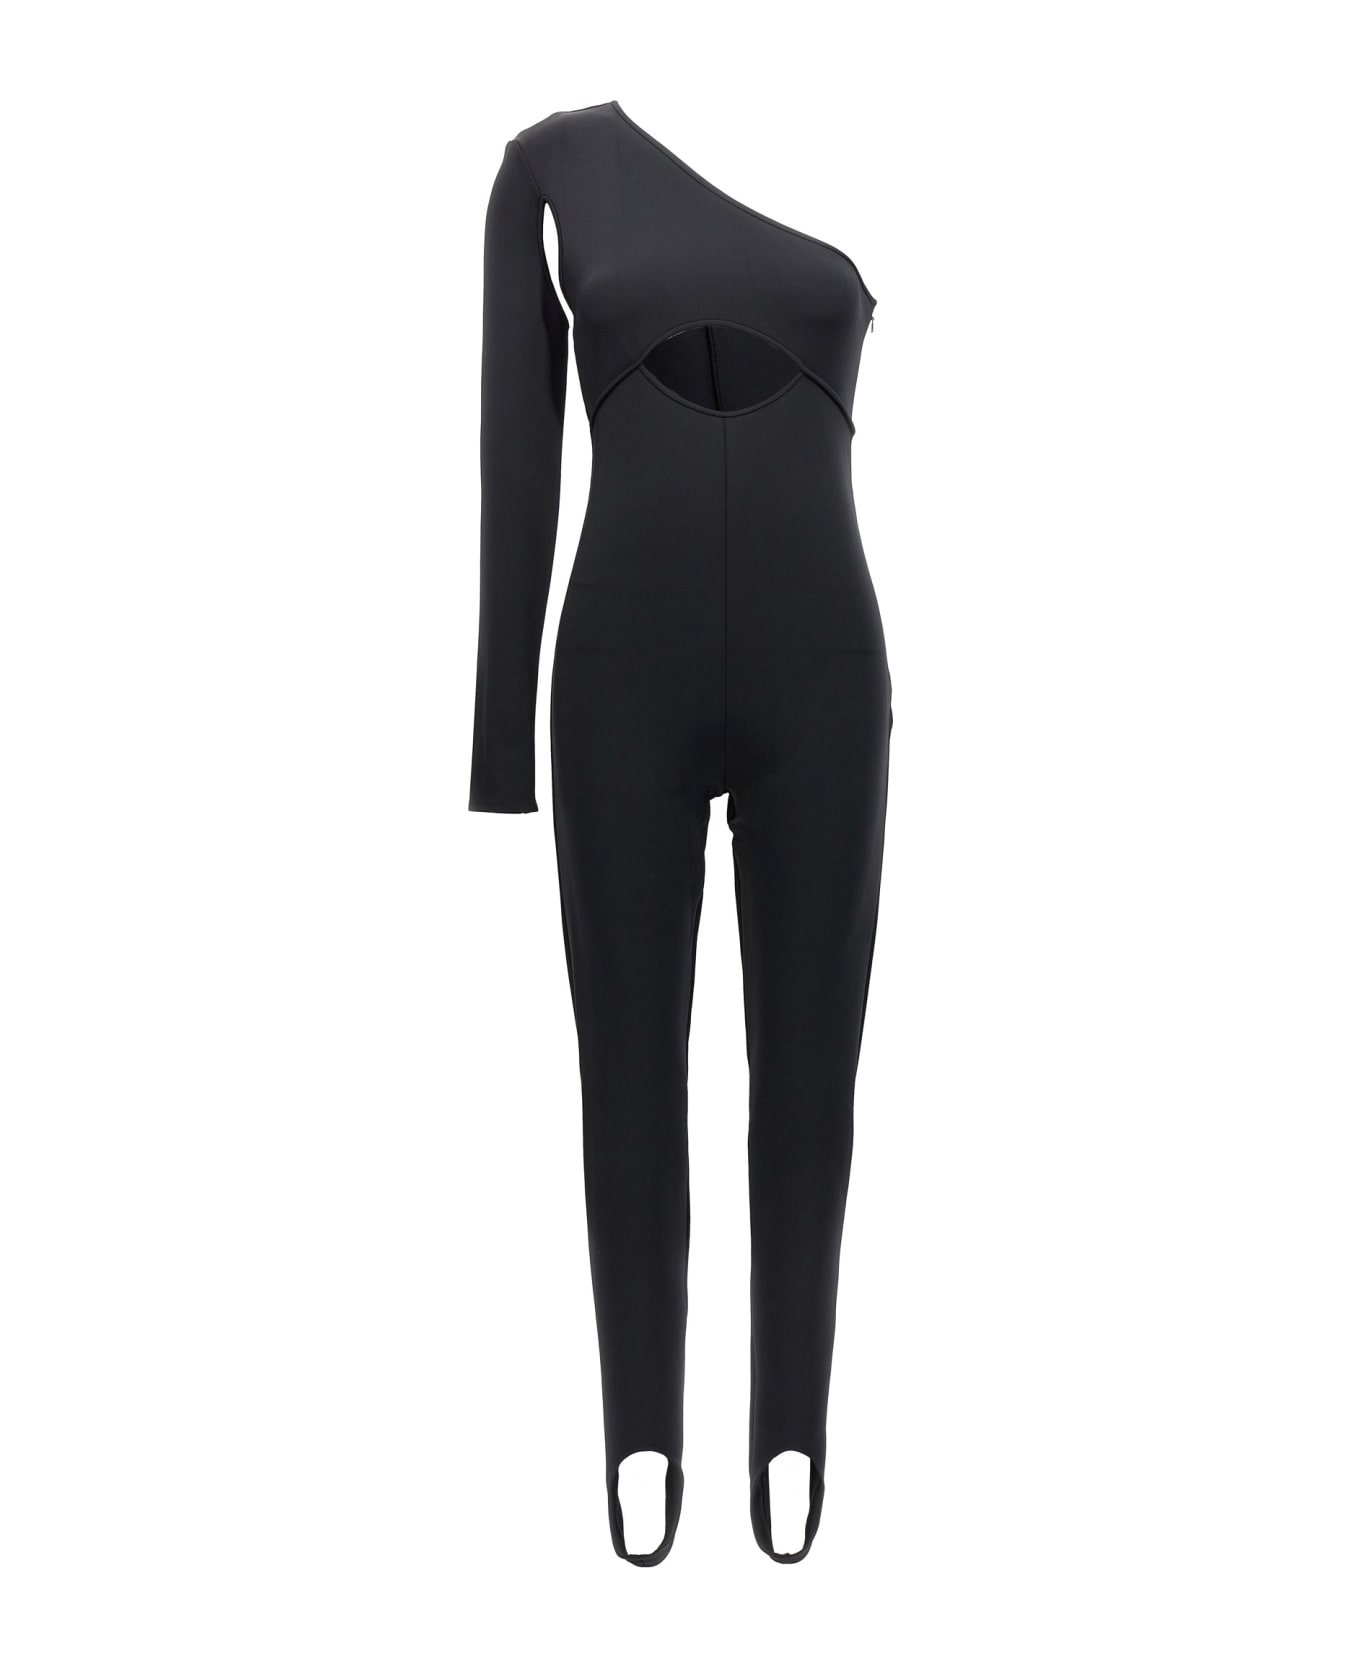 David Koma Scuba Cut Out One-length Bodysuit - Black  